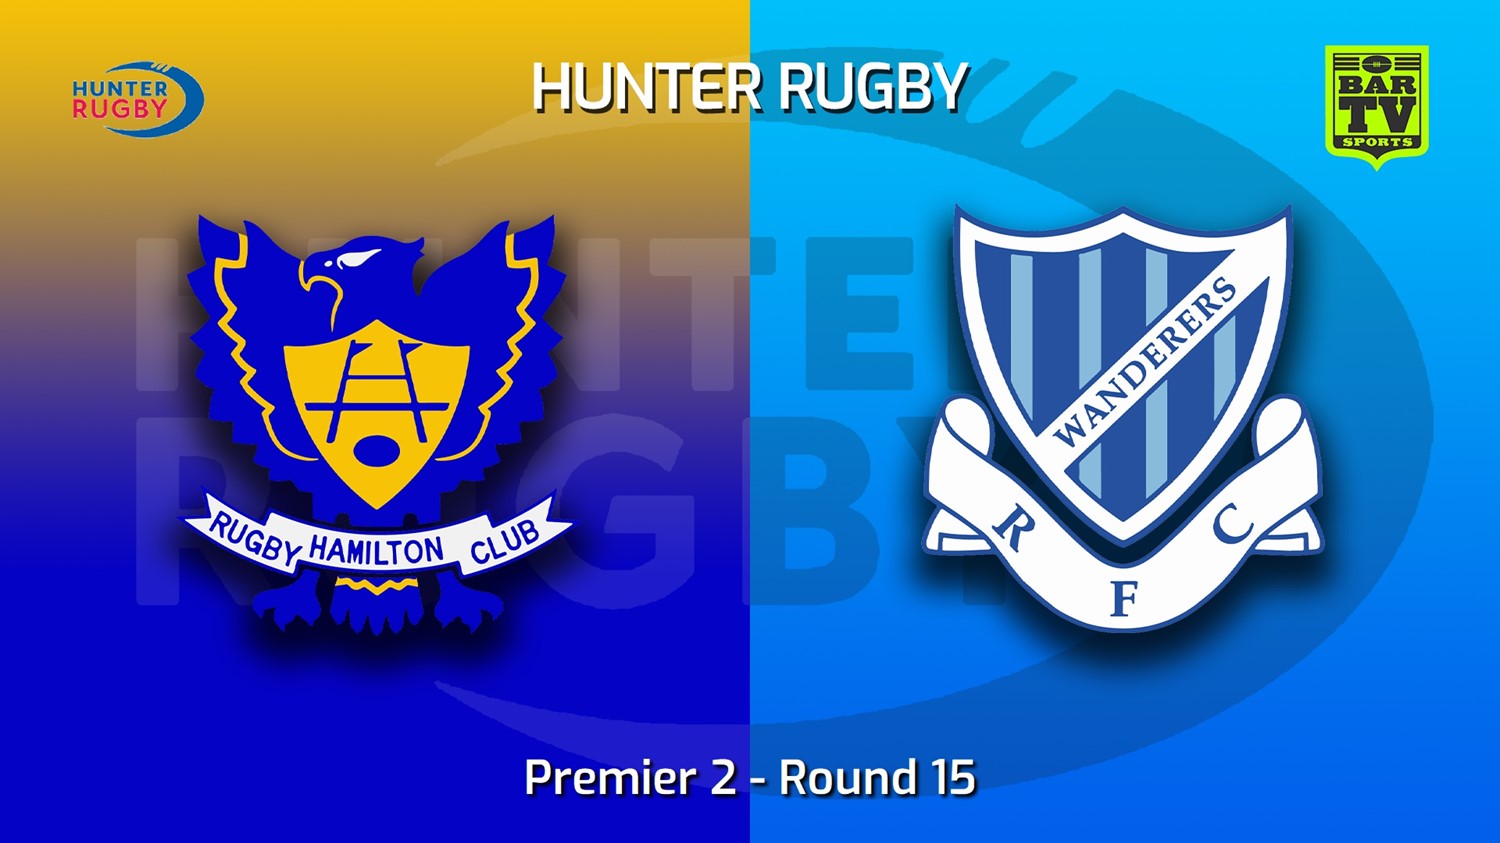 220806-Hunter Rugby Round 15 - Premier 2 - Hamilton Hawks v Wanderers Slate Image